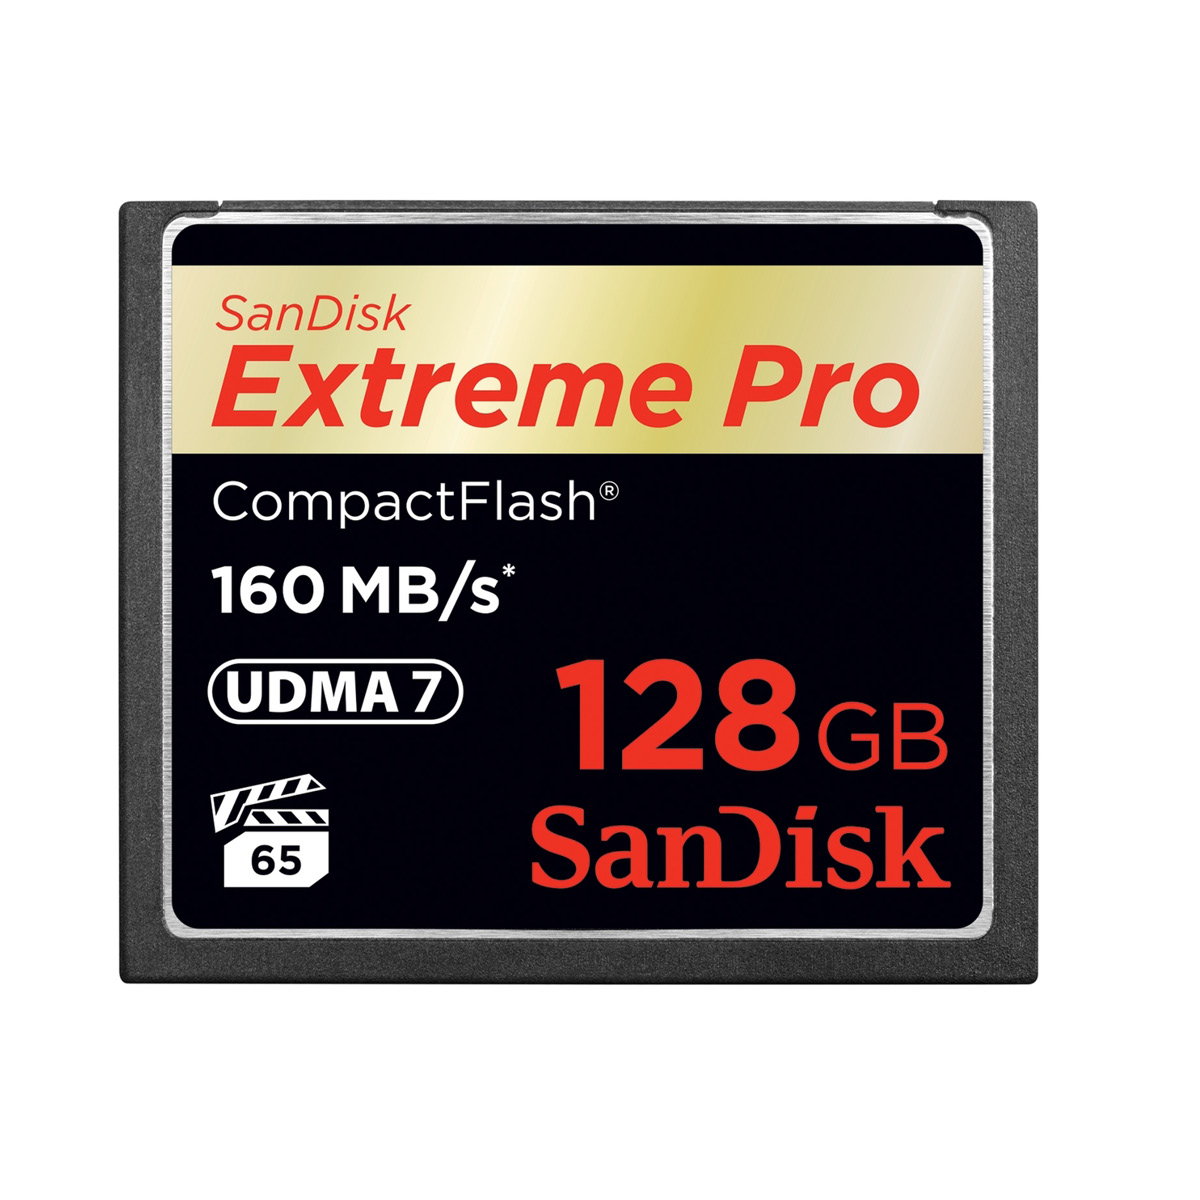 SanDisk 128 GB CompactFlash ExtremePro